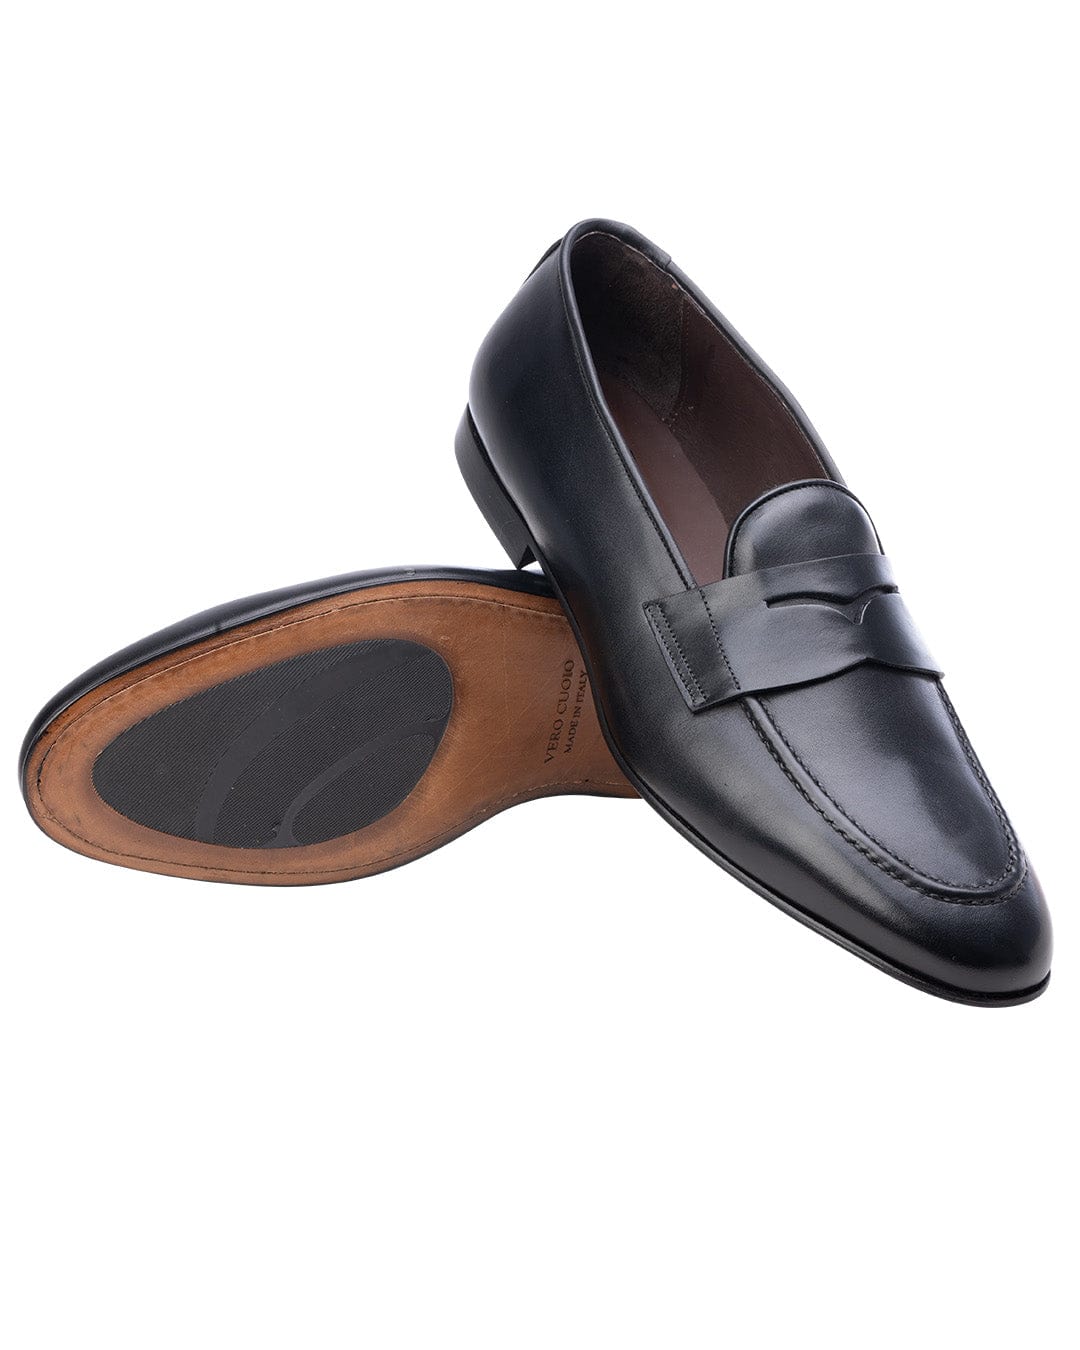 Gagliardi Shoes Gagliardi Black Made in Italy Penny Loafers